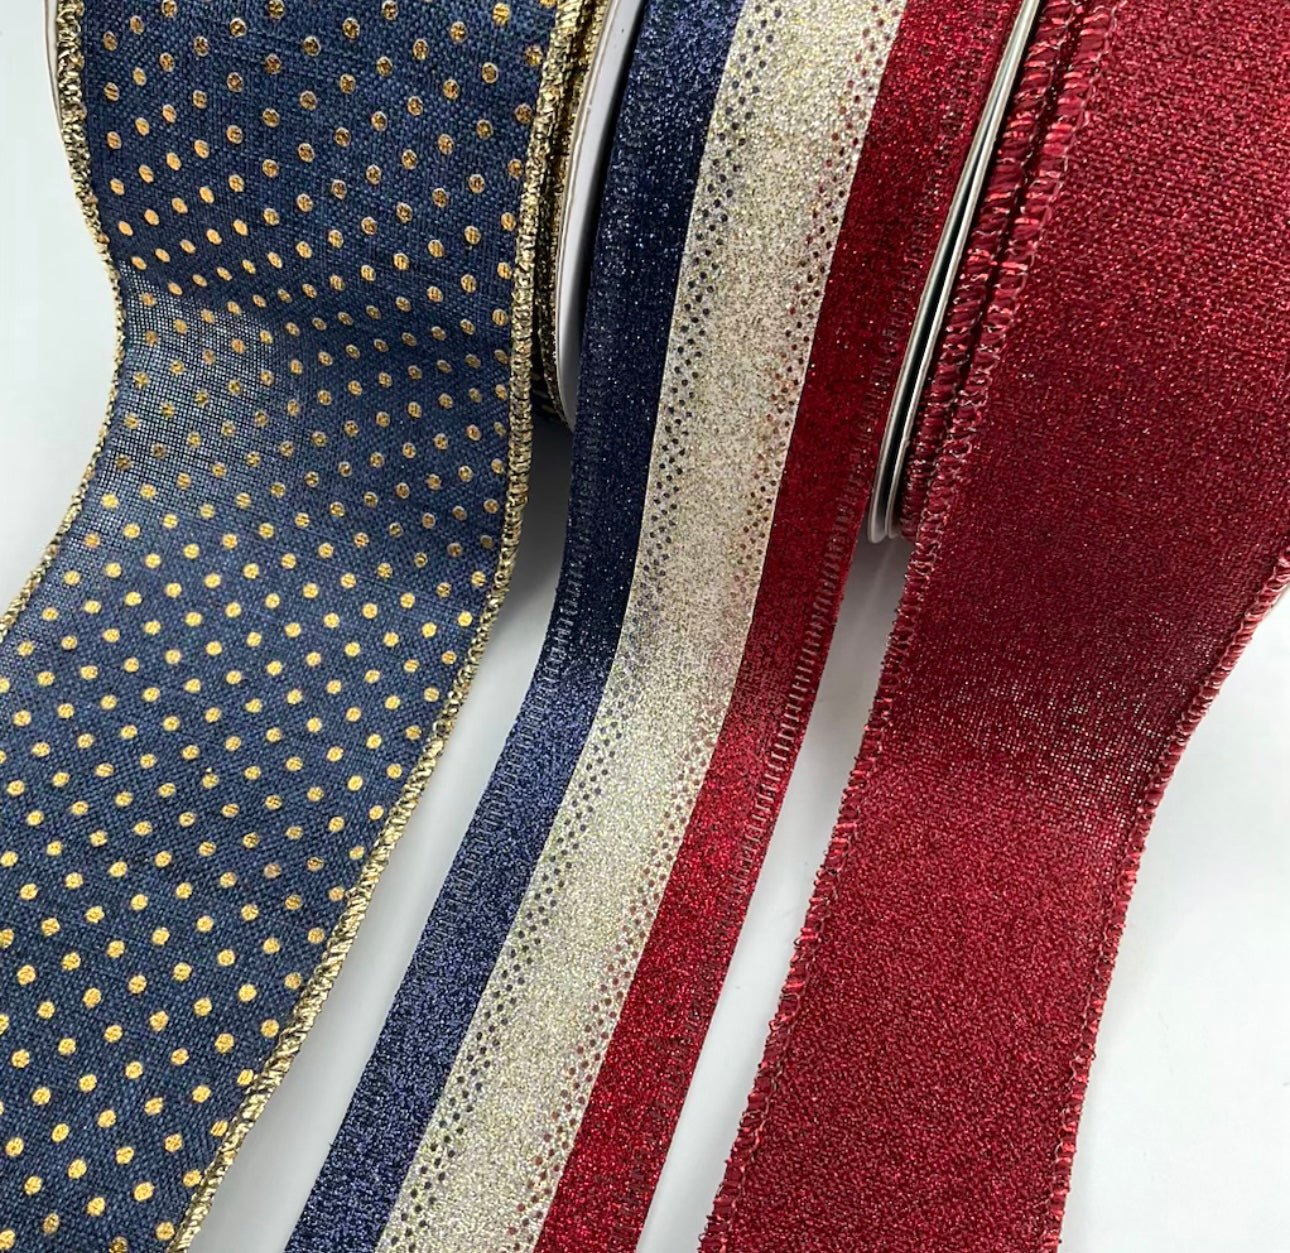 Burgundy and navy Patriotic bow bundle x 3 ribbons - Greenery MarketWired ribbon